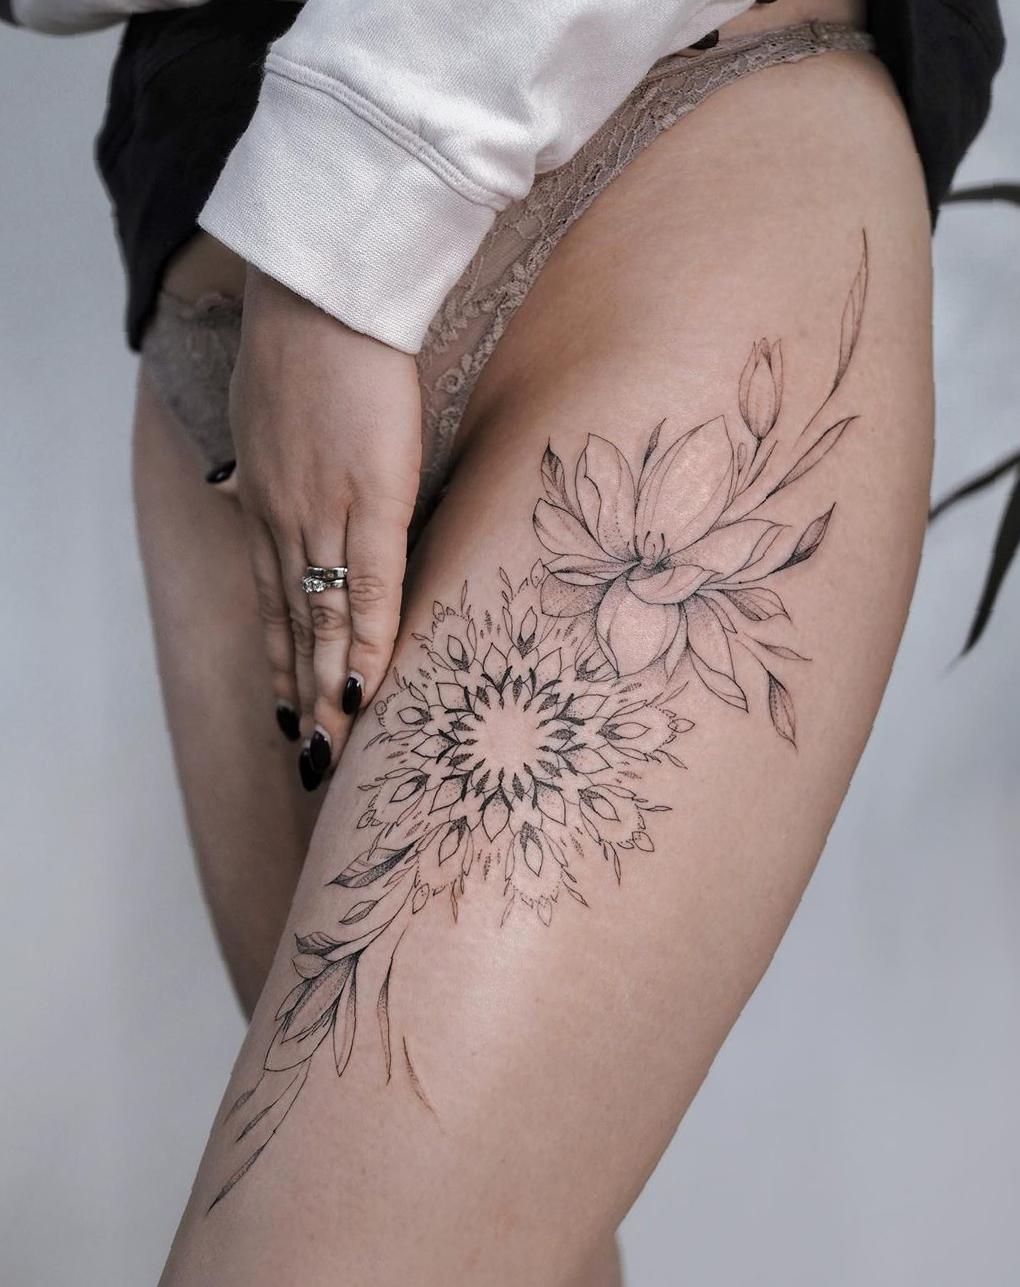 Best Leg Tattoo Idea Images for Women tattoo, tattoo images, leg tattoo, women tattoo, tattoo design